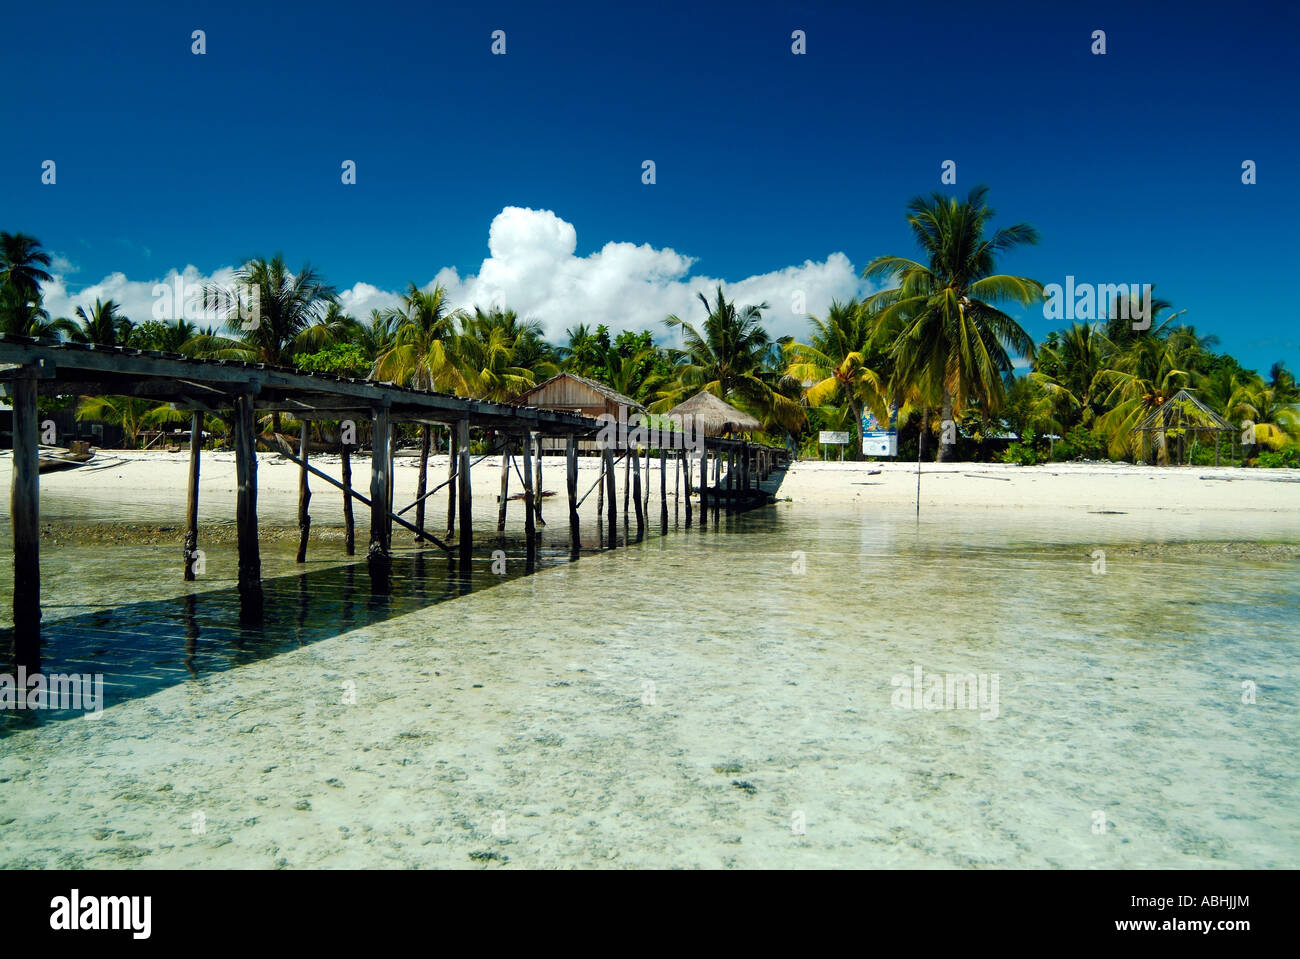 Small island in Raja Ampat Archipelago, Indonesia Stock Photo